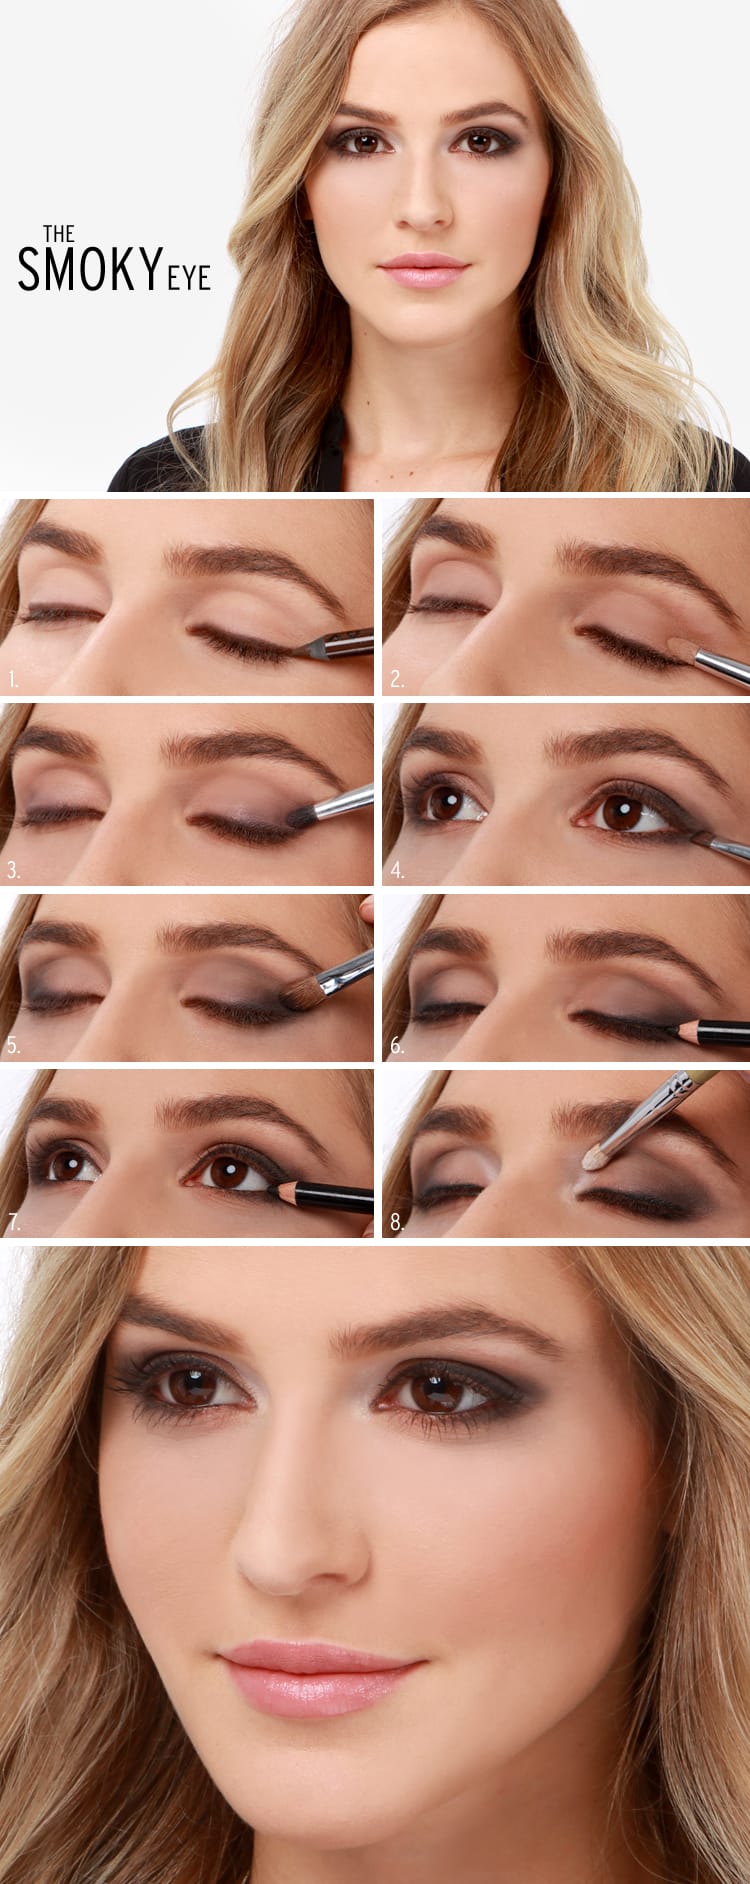 Lulus How-To: The Smoky Eye Makeup Tutorial - Lulus.com Fashion Blog